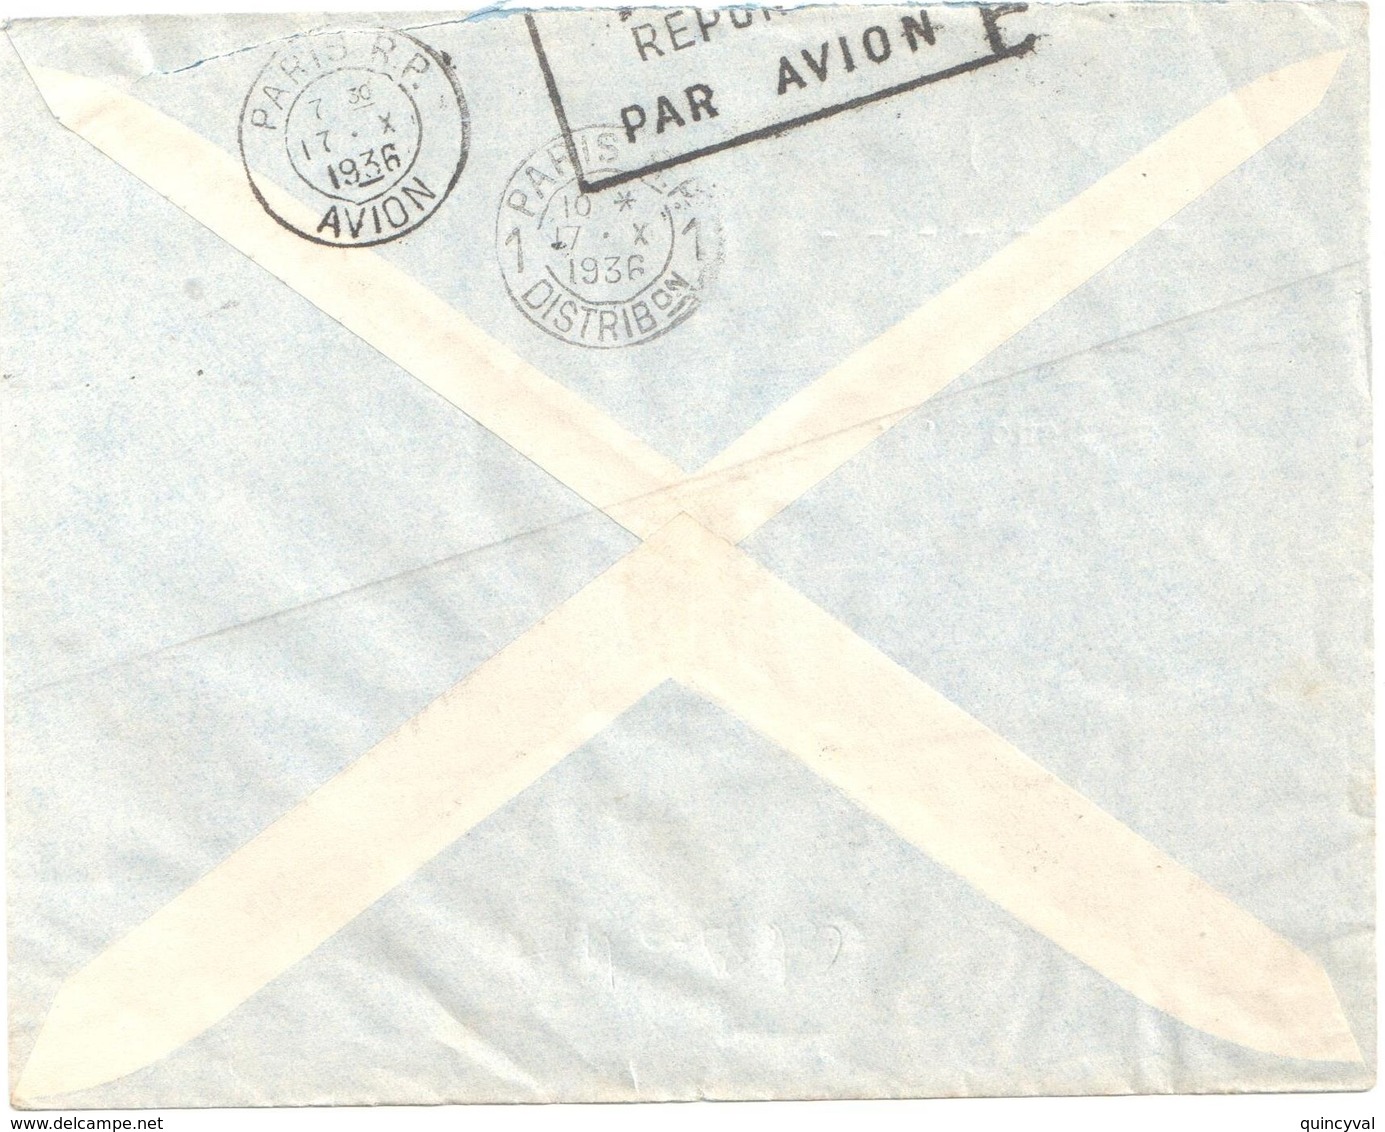 GAO Soudan Français Lettre PAR AVION Ob 10 10 1936 Arrivée Verso 17/10/1936 1,25f Batelier Niger Yv 80 - Briefe U. Dokumente